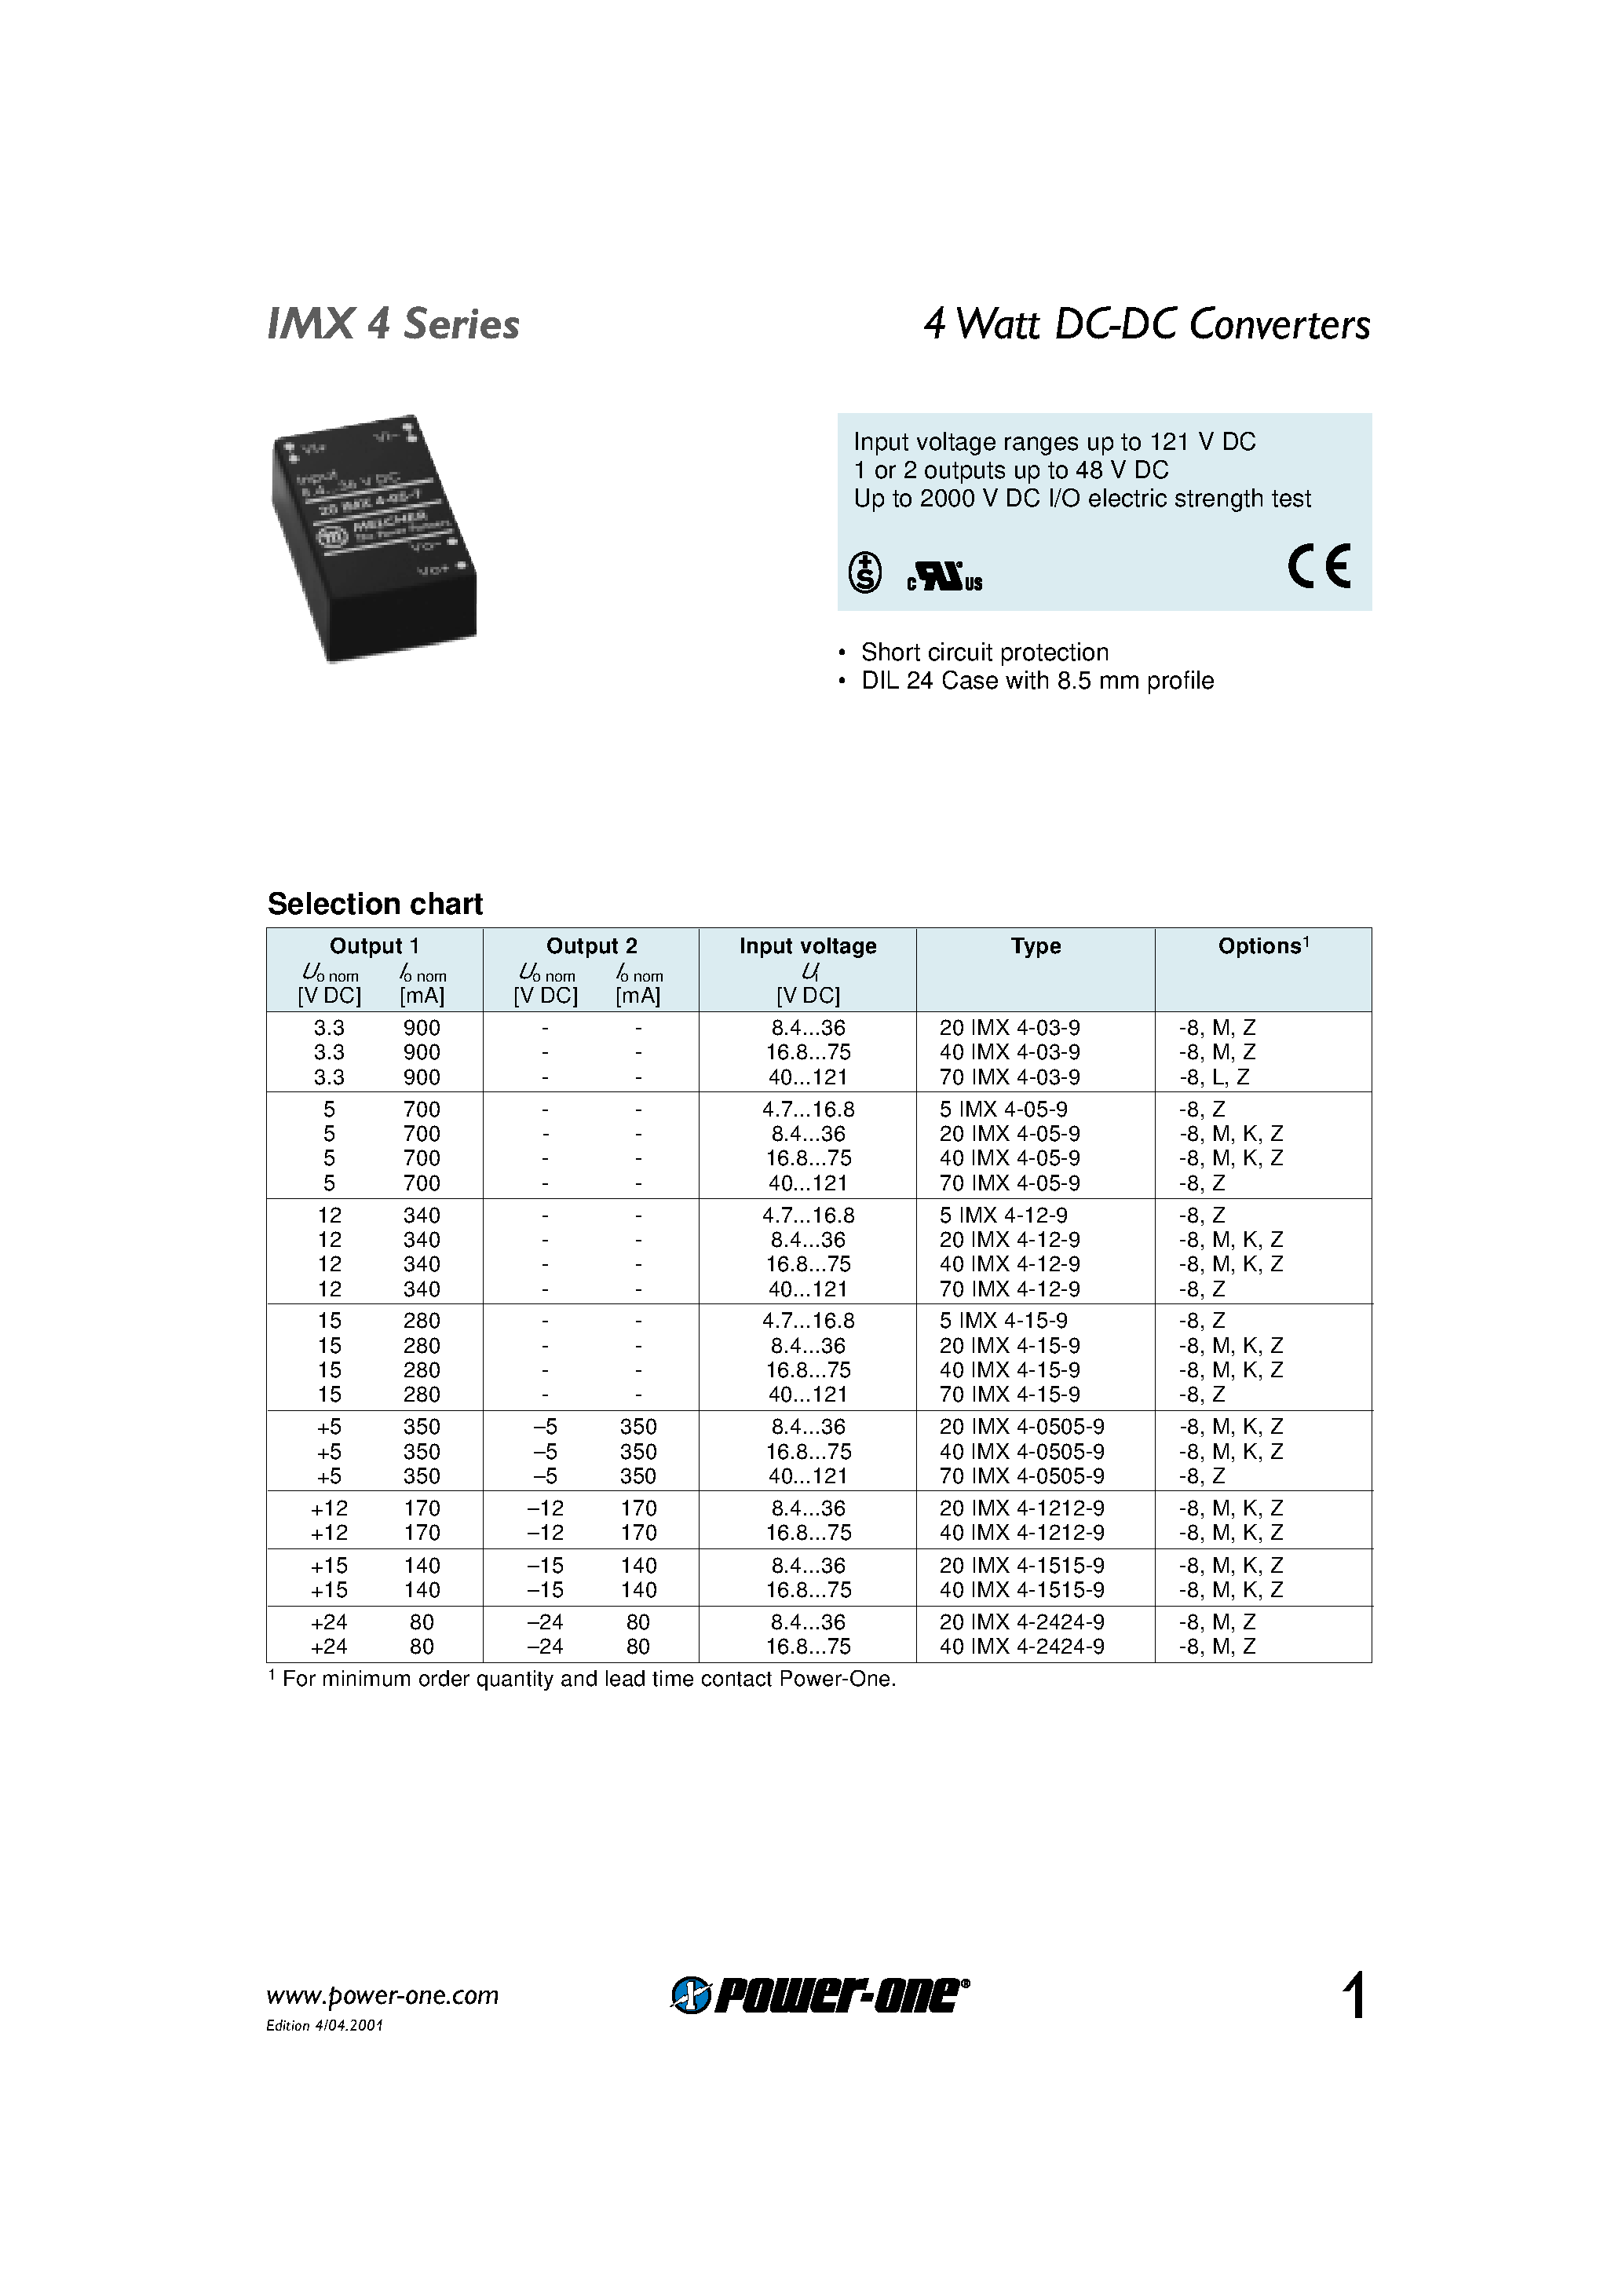 Datasheet 70IMX4-0505-9 - 4 Watt DC-DC Converters page 1